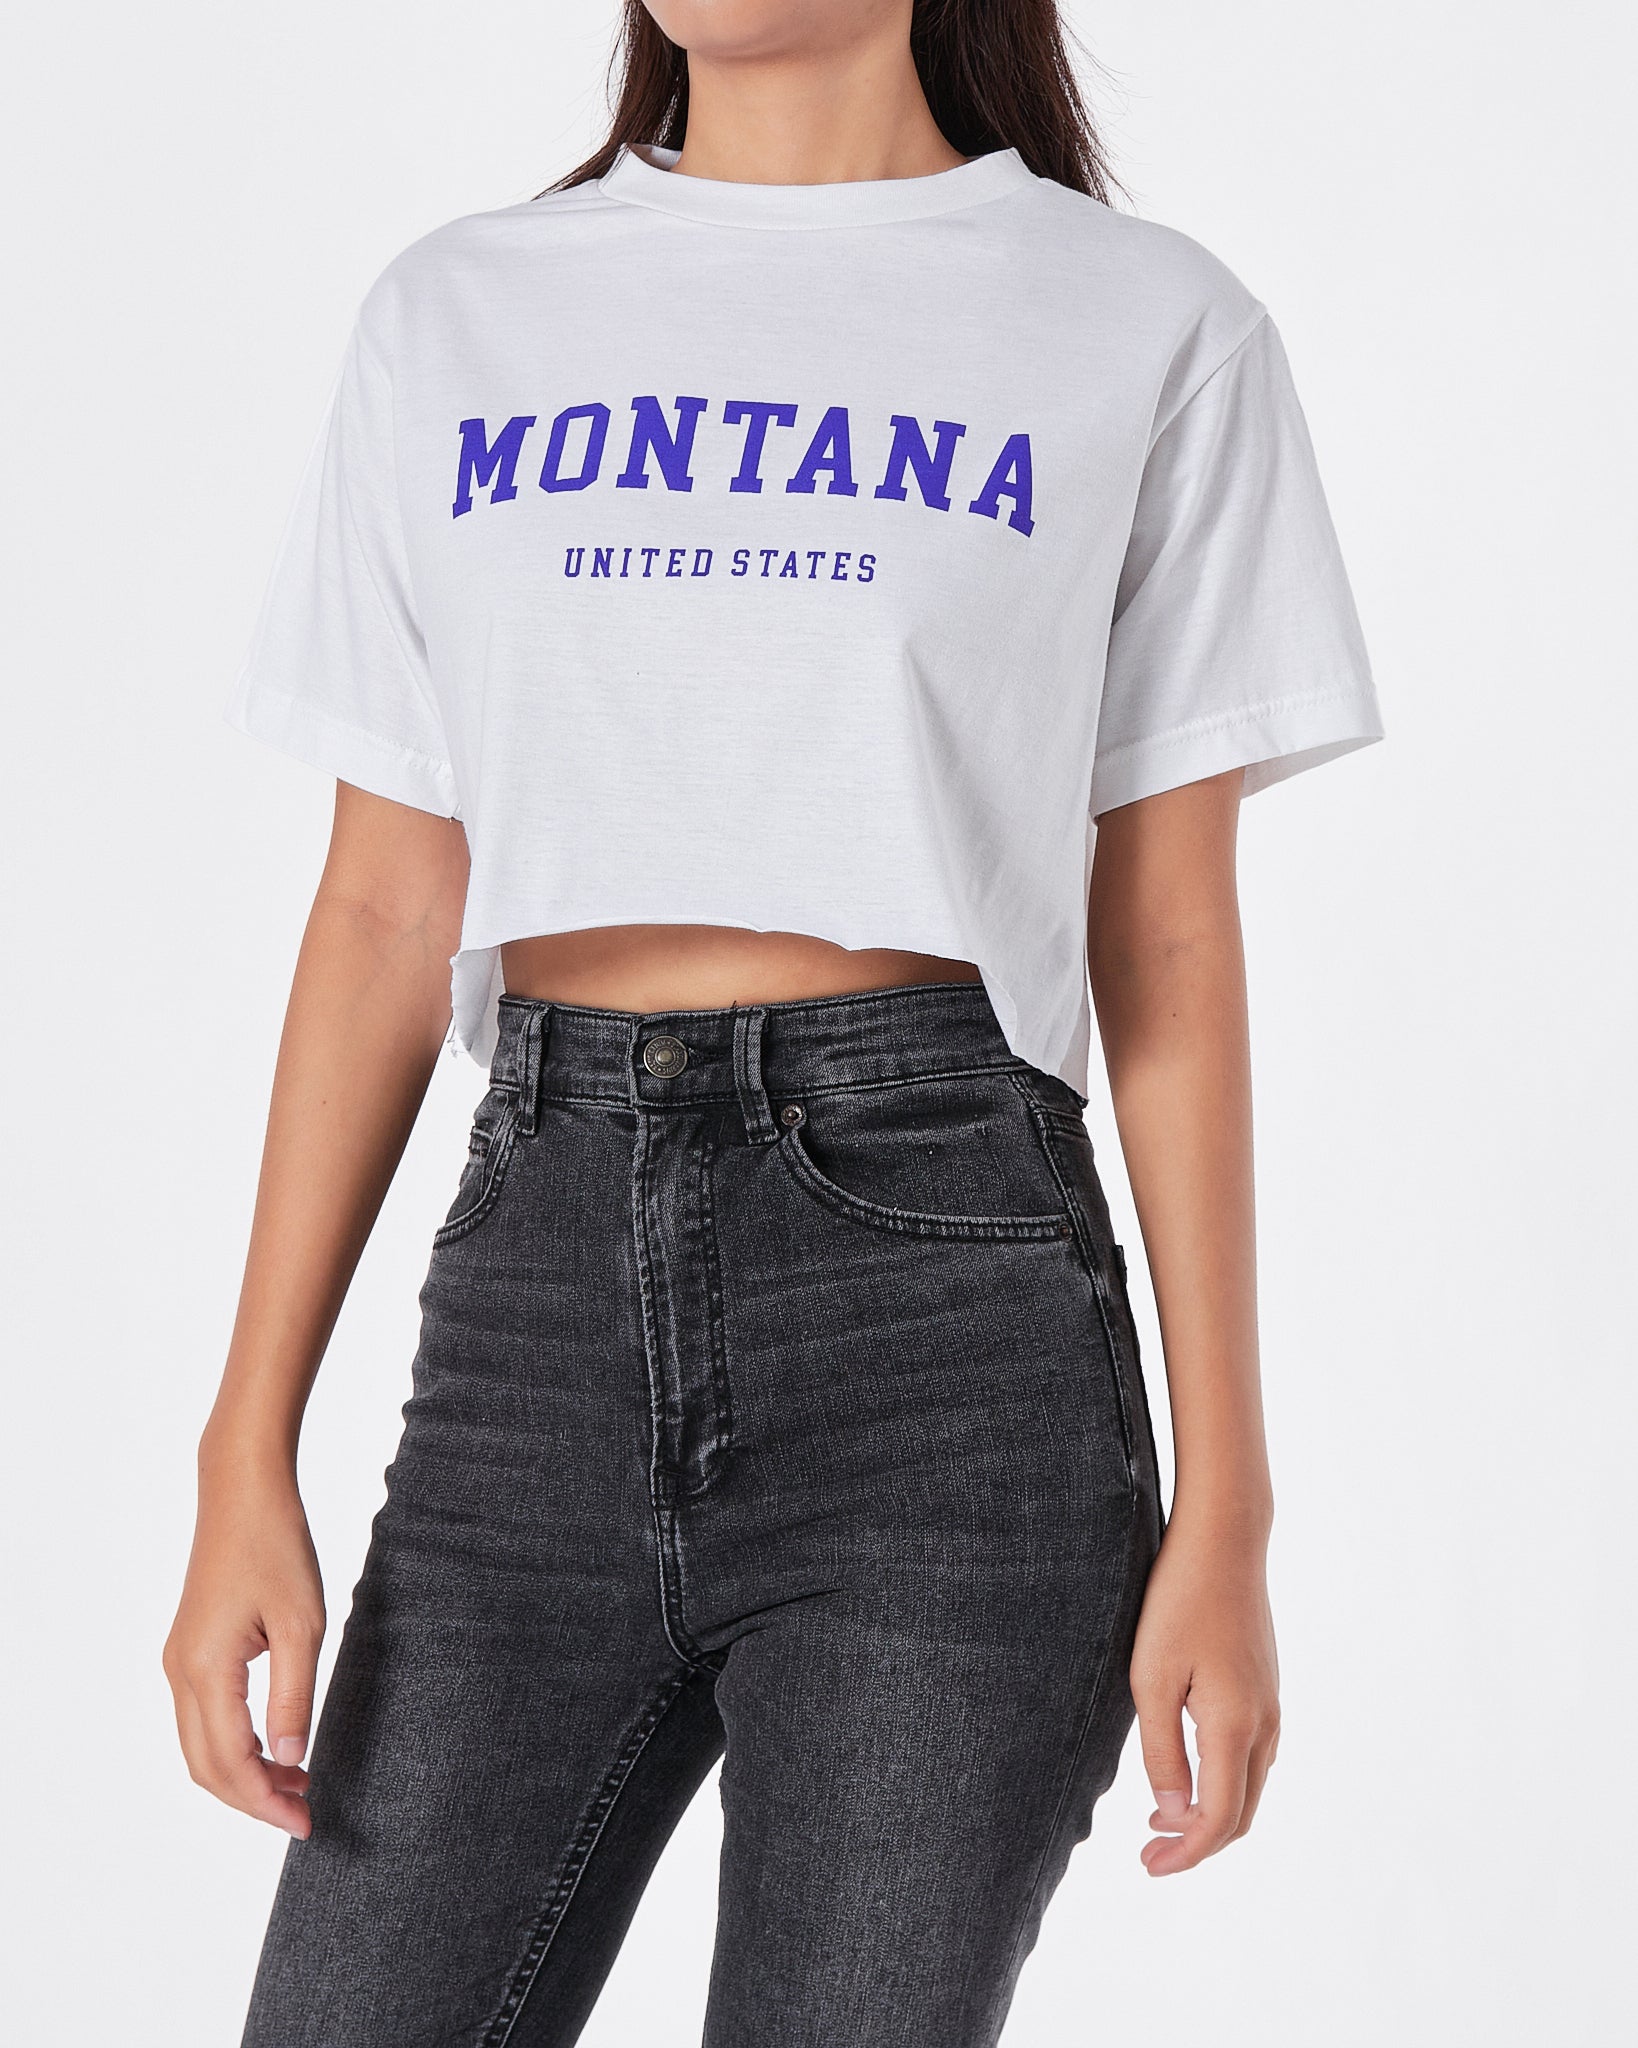 Motana Lady White T-Shirt Crop Top 9.90